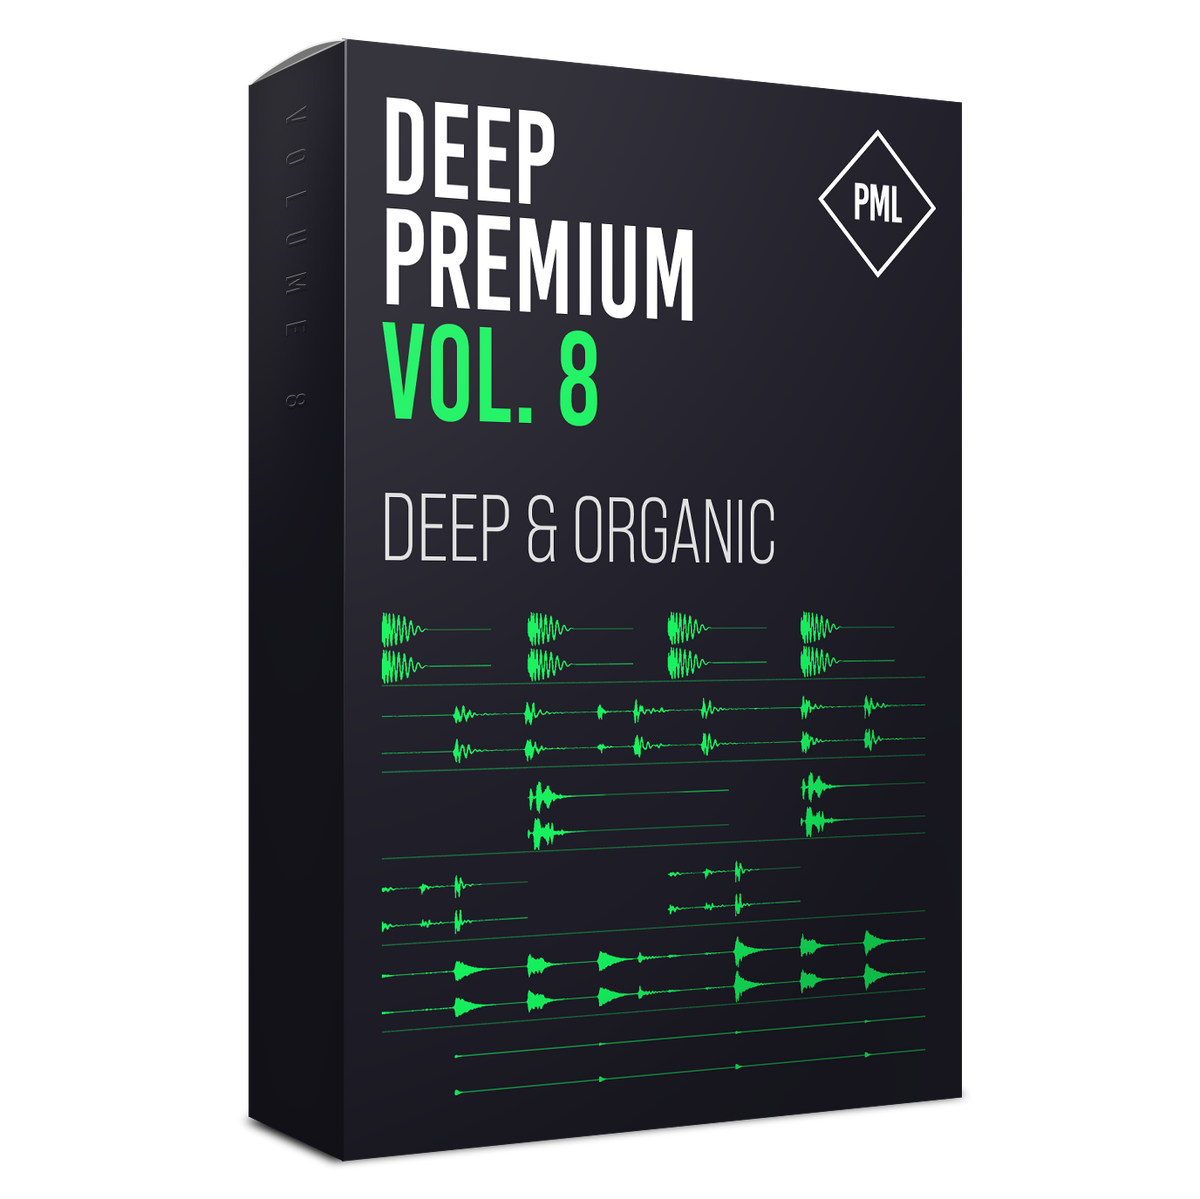 Deep Premium VOl. 8